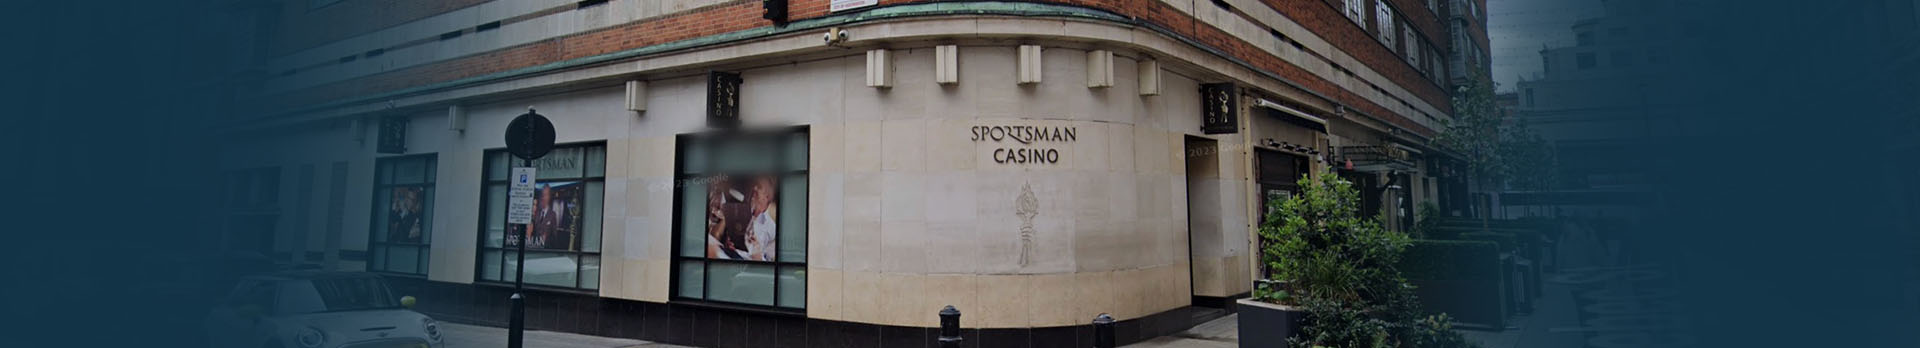 Sportsman Casino London